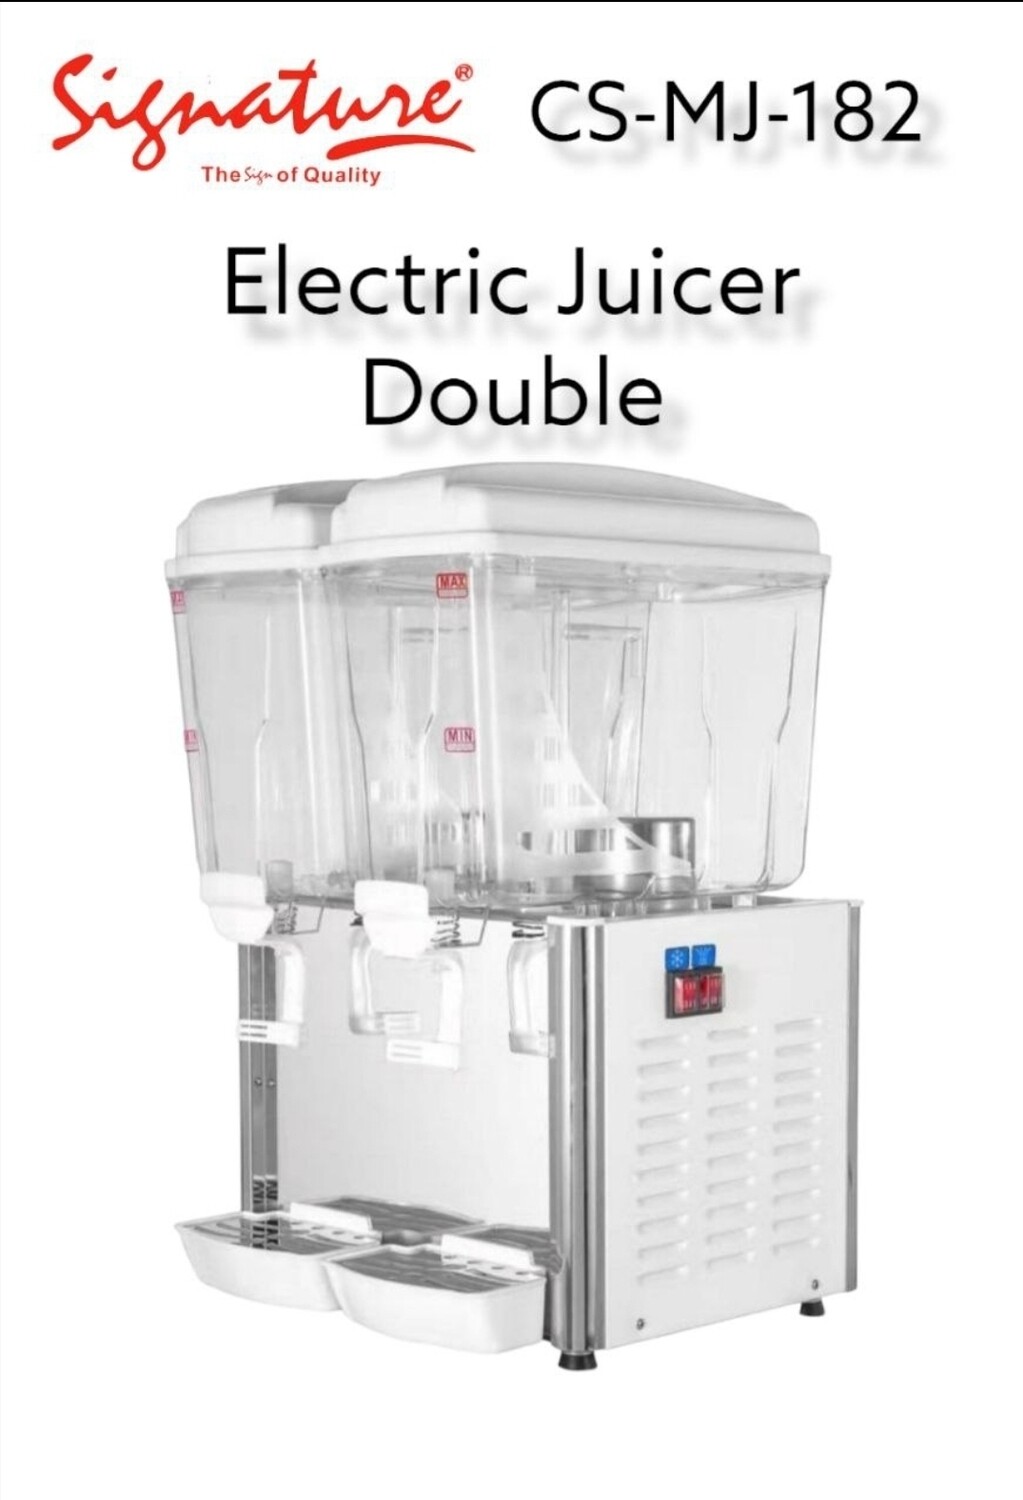 Signature Electric Juice Dispenser Double Capacity Up to 2x17 Ltr CS-MJ-182